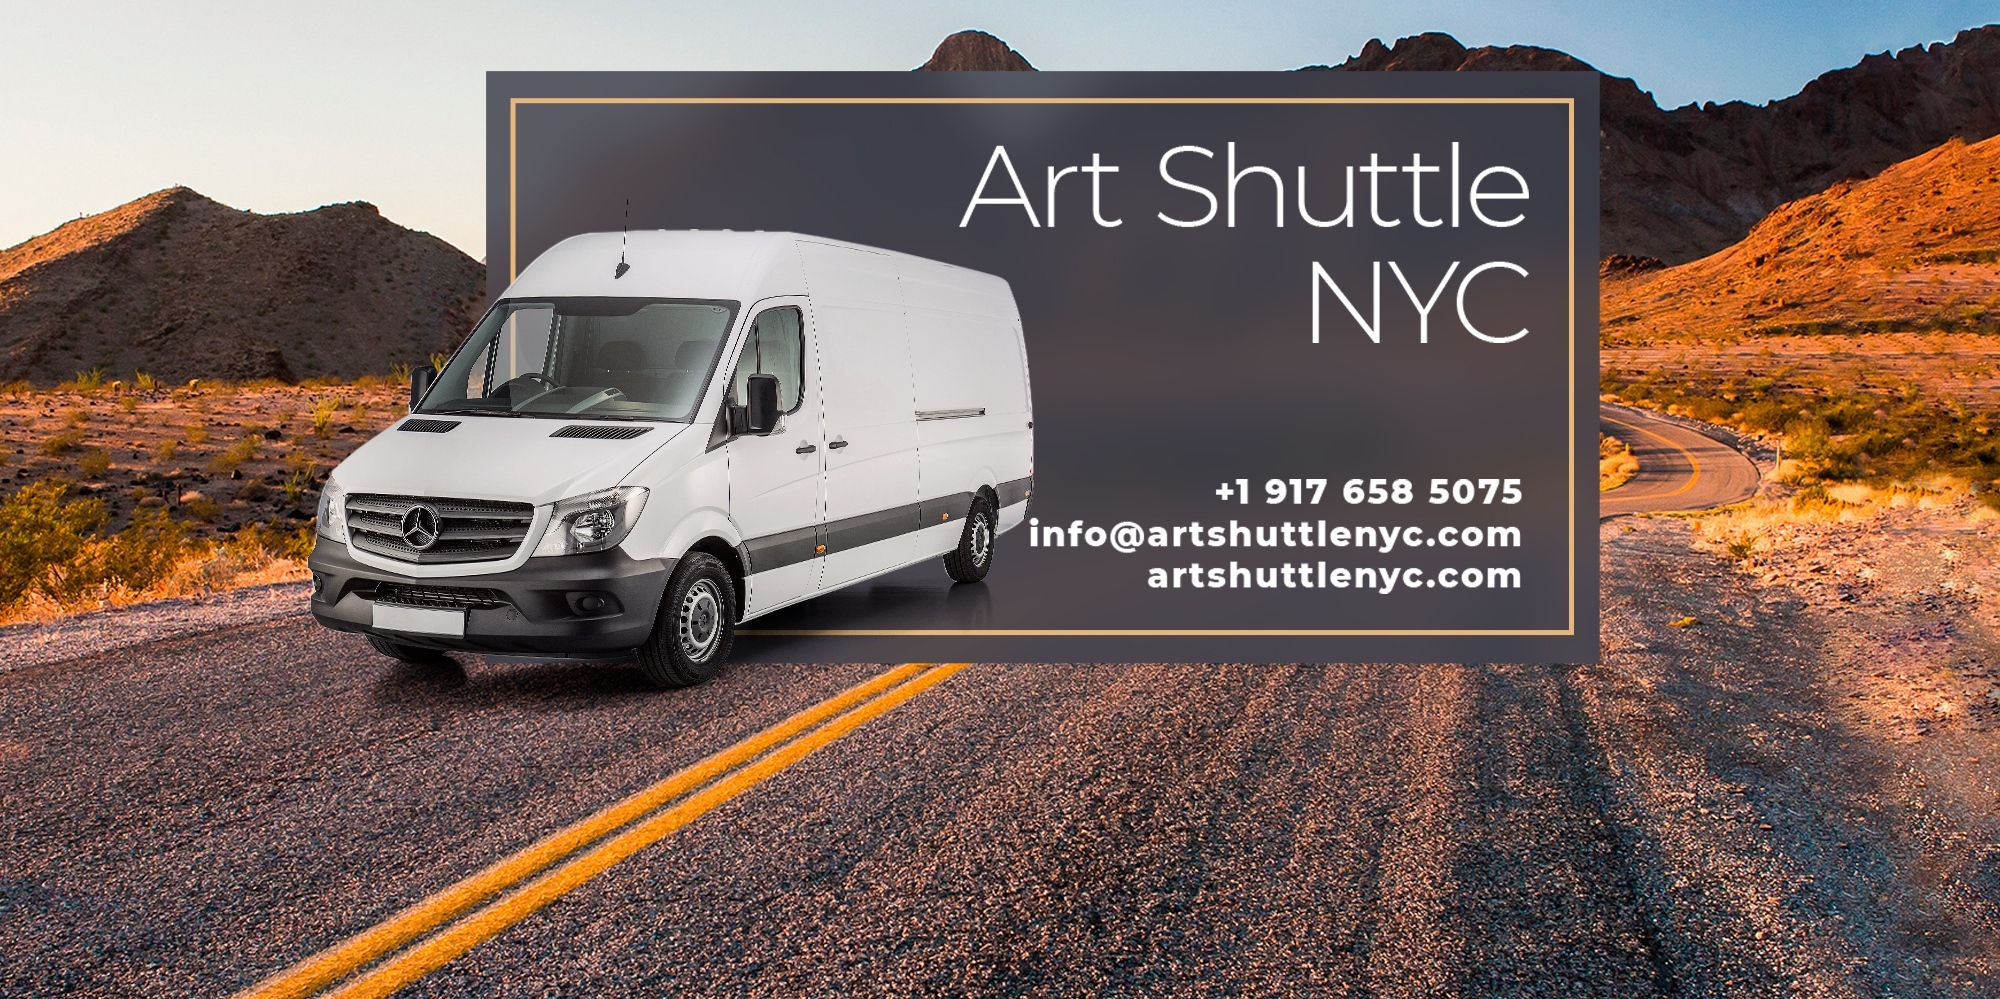 Art Shuttle NYC